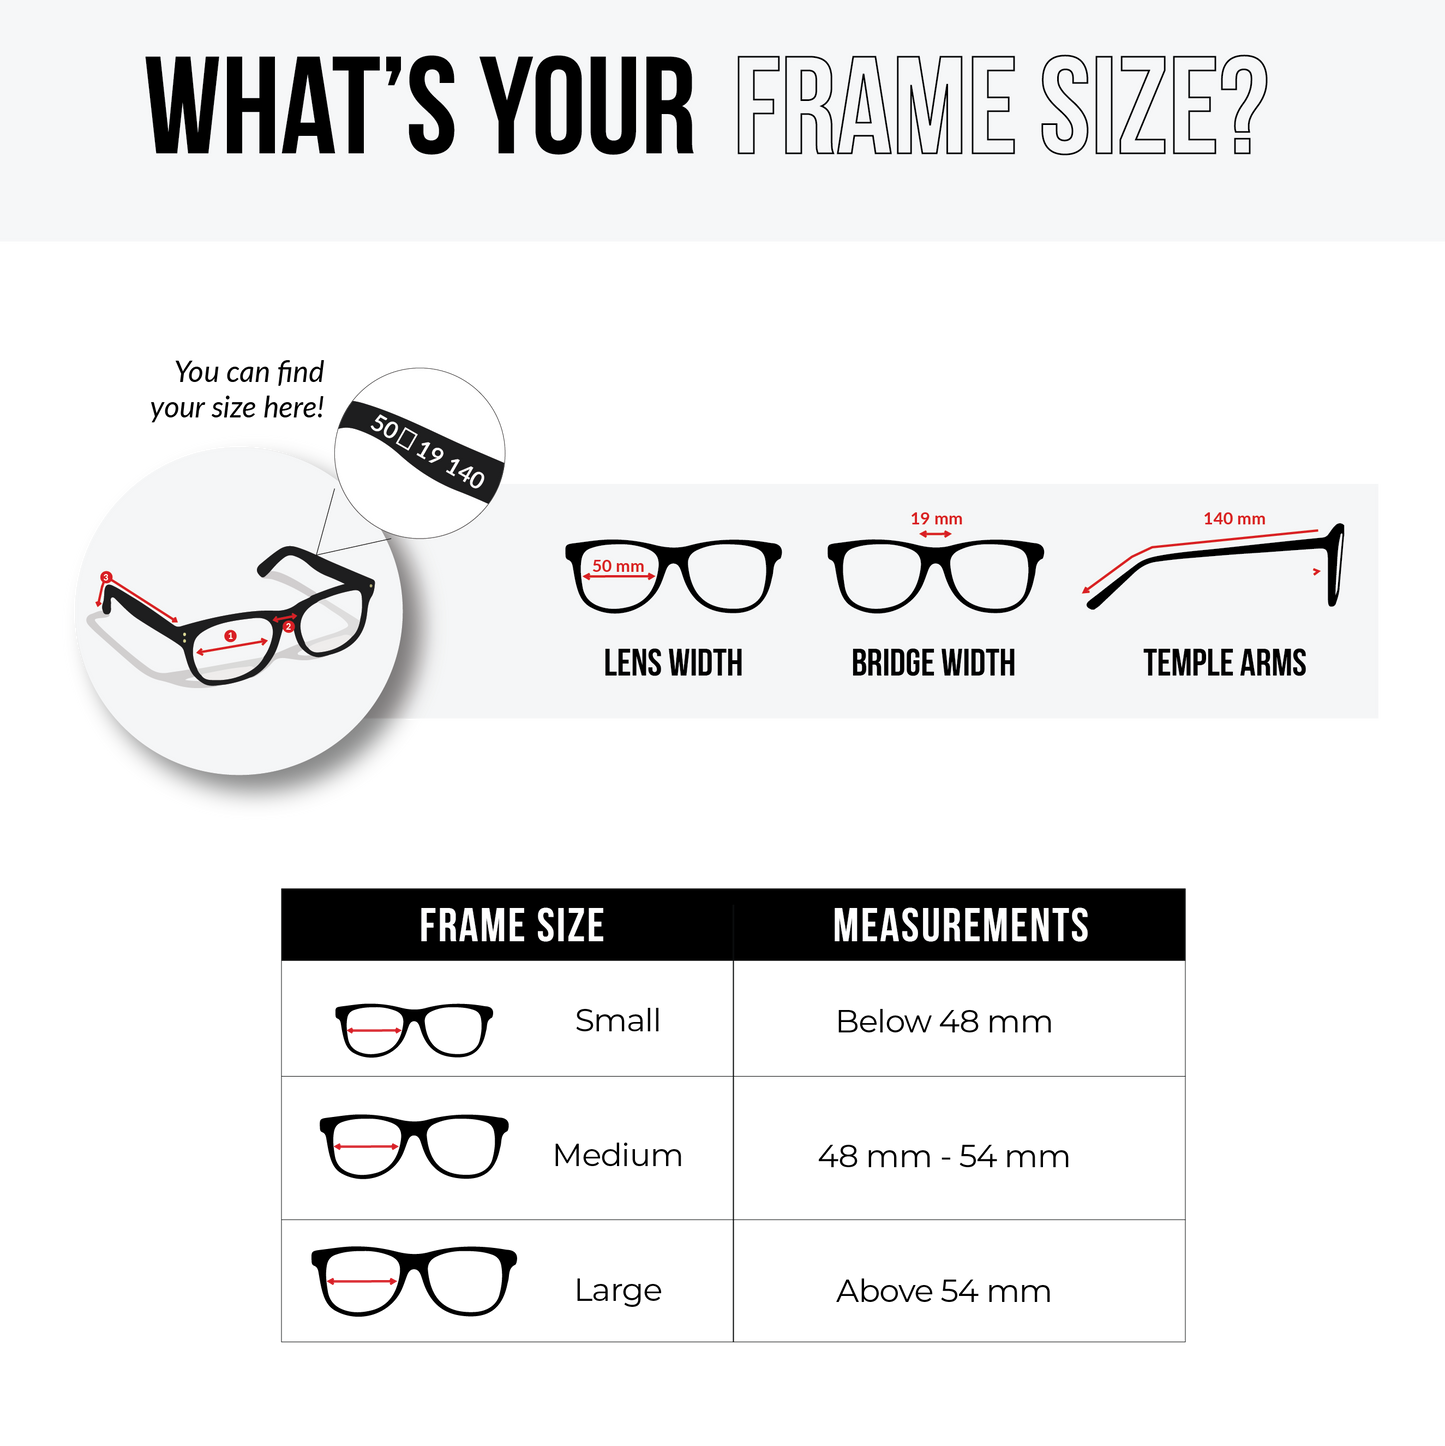 NS Luxury - 3588 - Silver - Eyeglasses